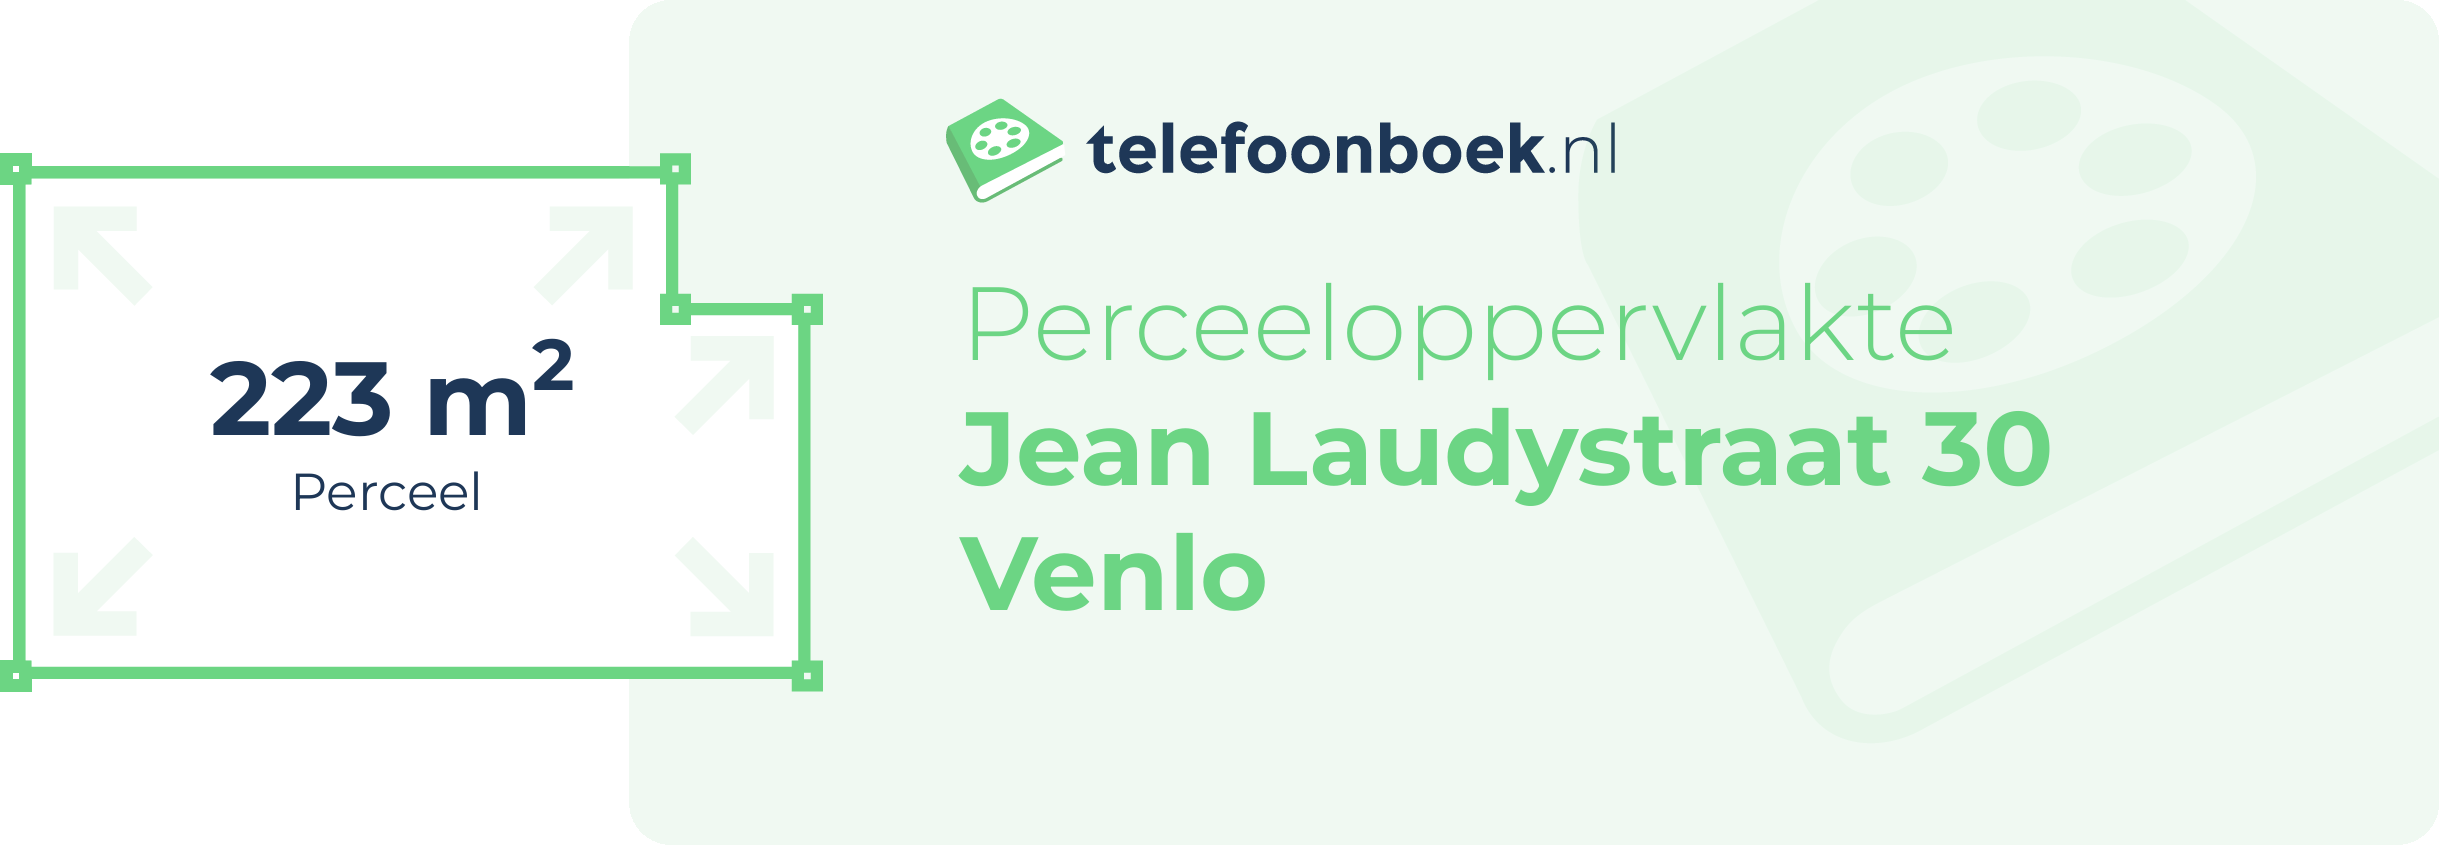 Perceeloppervlakte Jean Laudystraat 30 Venlo